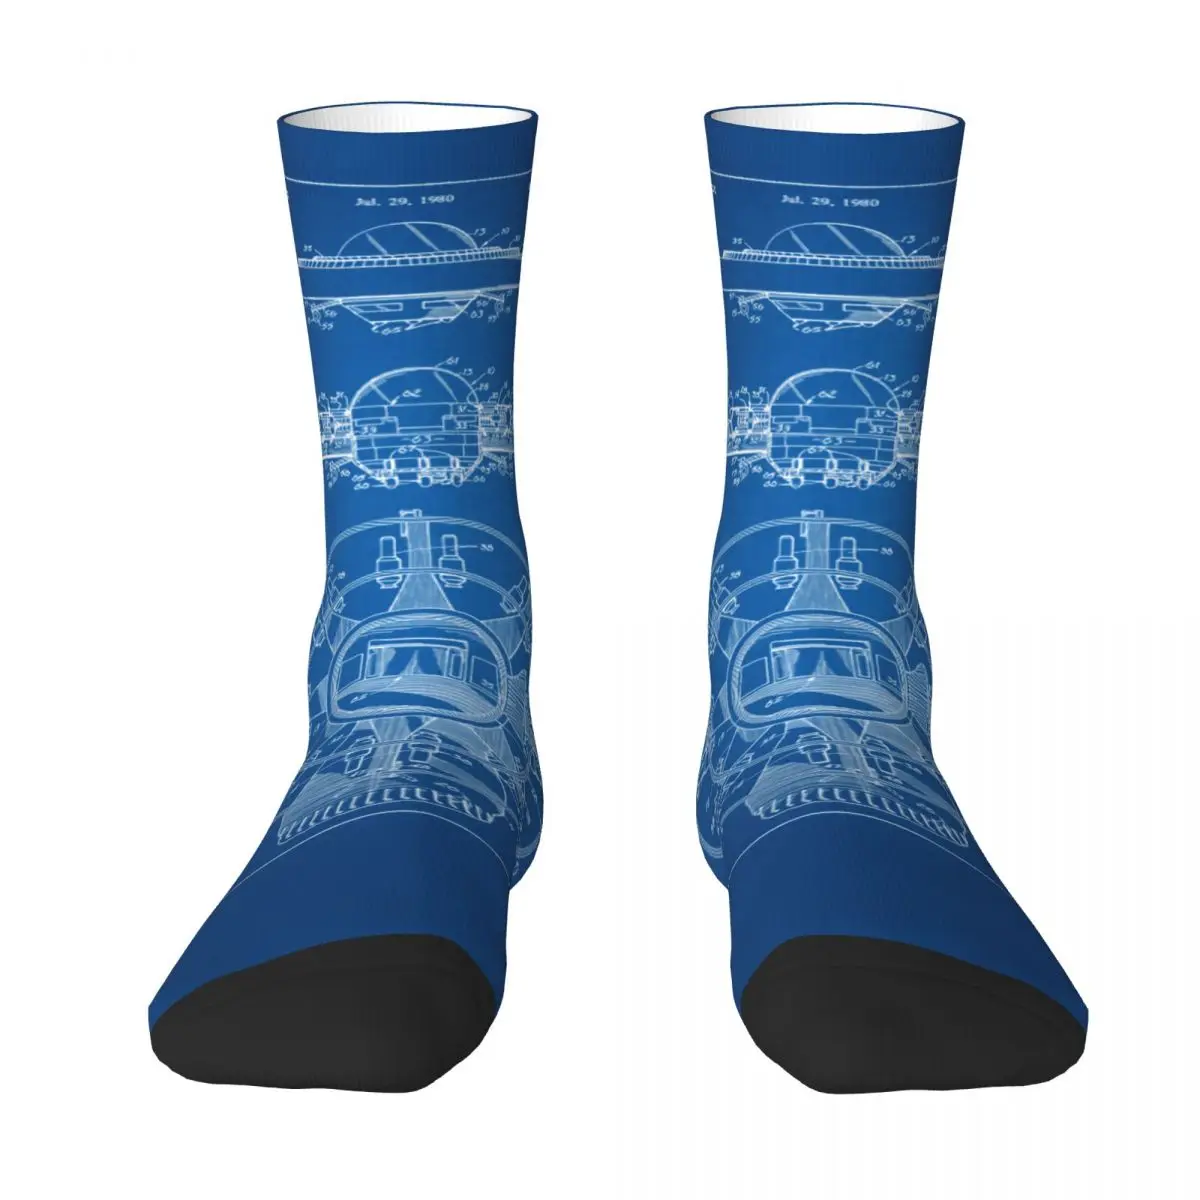 

UFO US Patent Ufo Us Patenth Contrast color socks Blanket roll Elastic Socks Humor Graphic Funny Patent Stocking